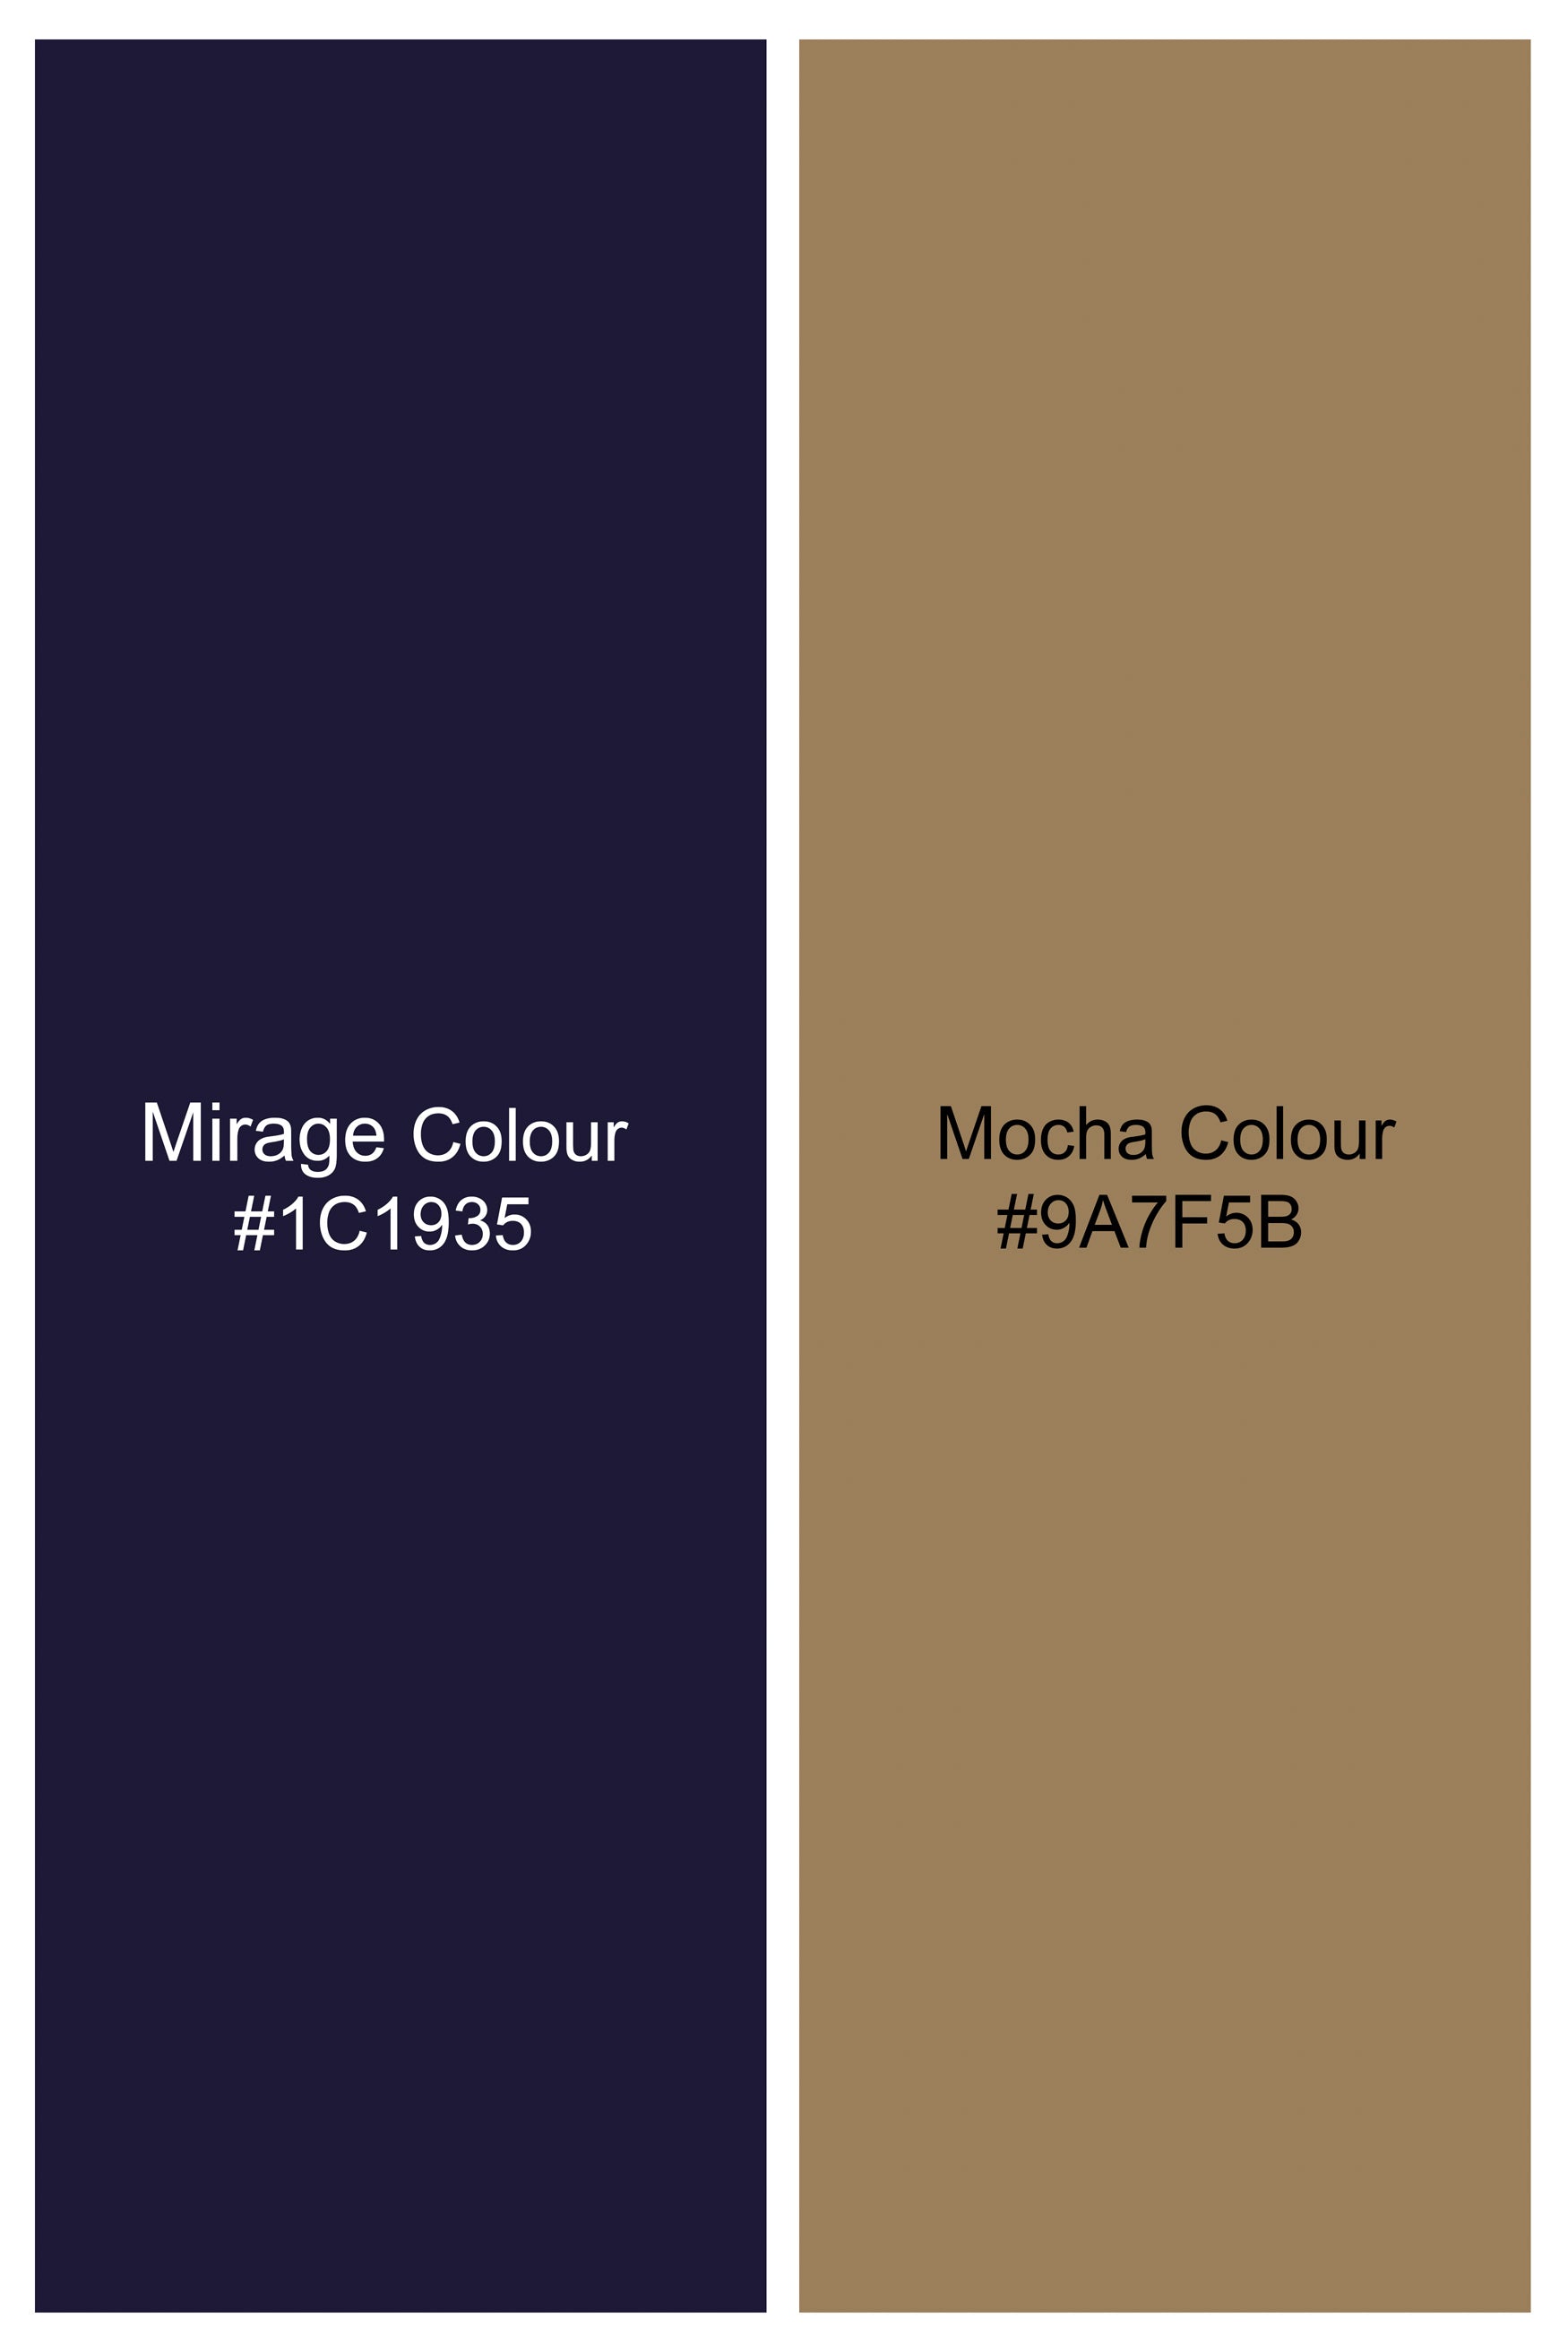 Mirage Blue and Mocha Brown Plaid Chambray Premium Giza Cotton Shirt